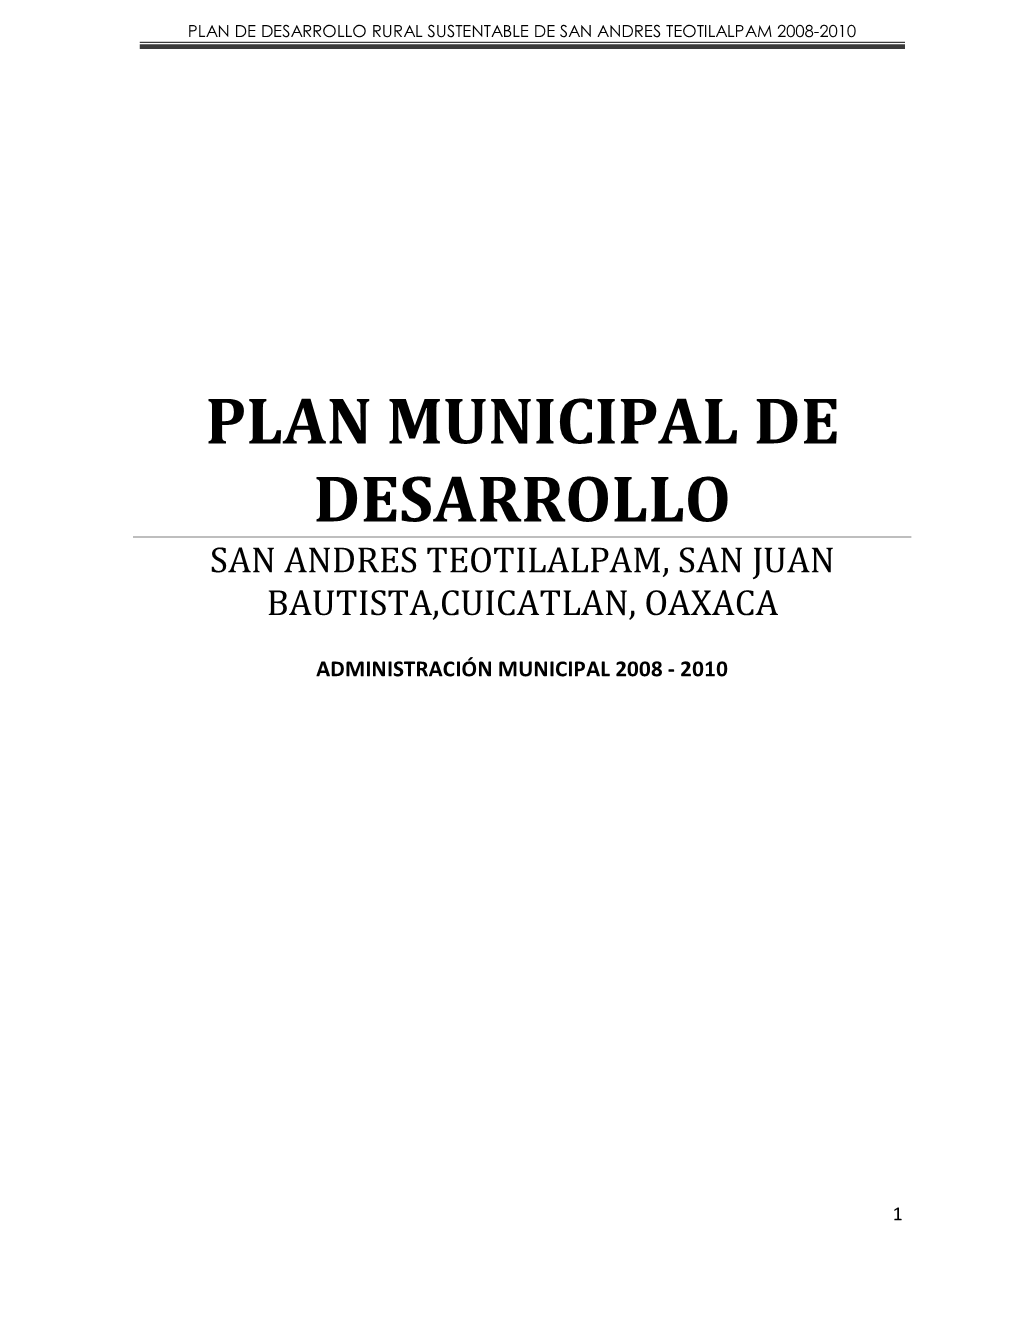 Plan Municipal De Desarrollo San Andres Teotilalpam, San Juan Bautista,Cuicatlan, Oaxaca